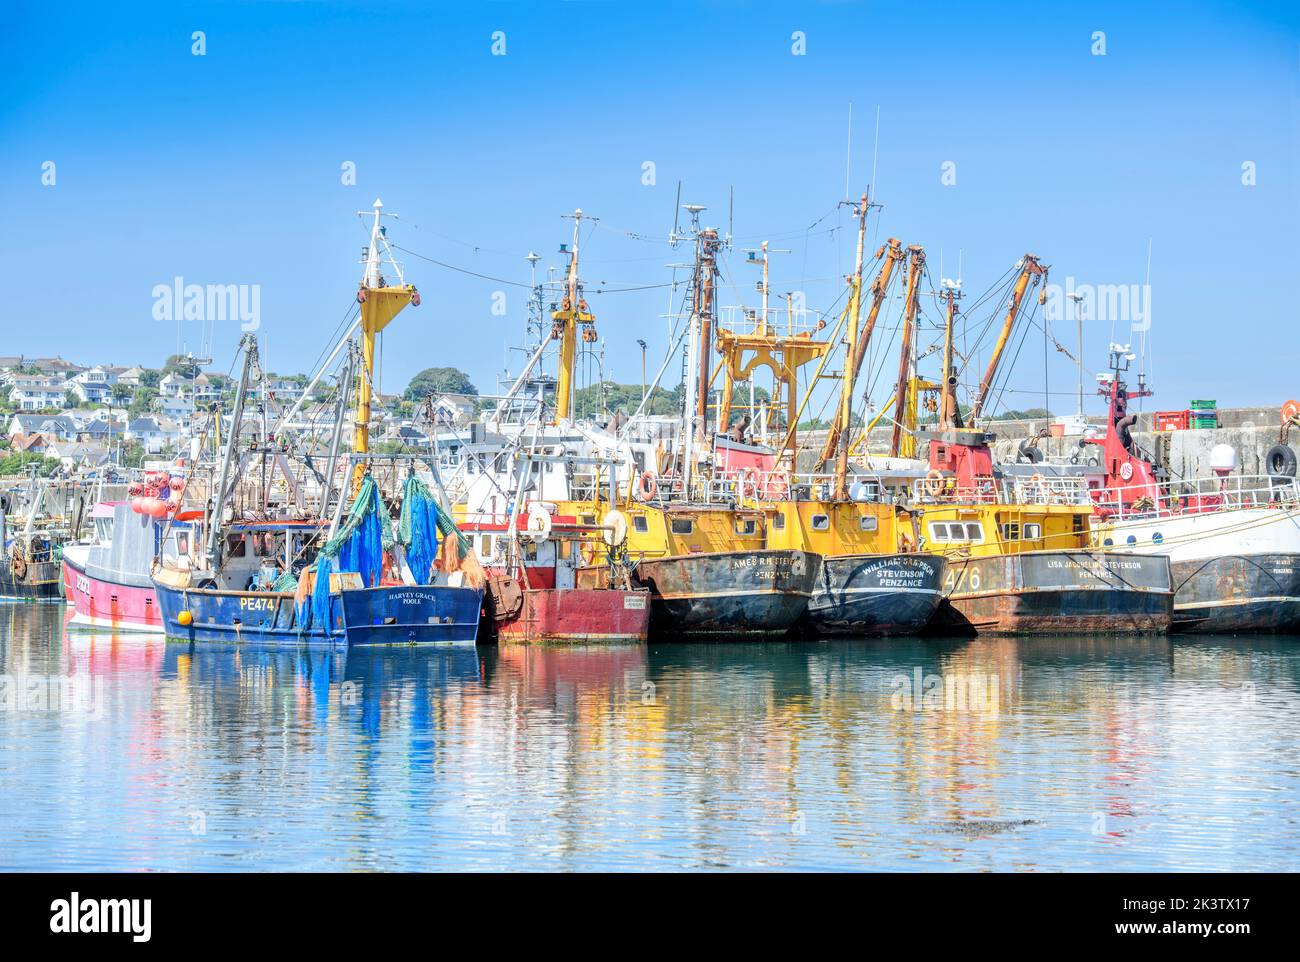 Trawlers awaiting repair in Newlyn harbour in Cornwall, UK Stock Photo